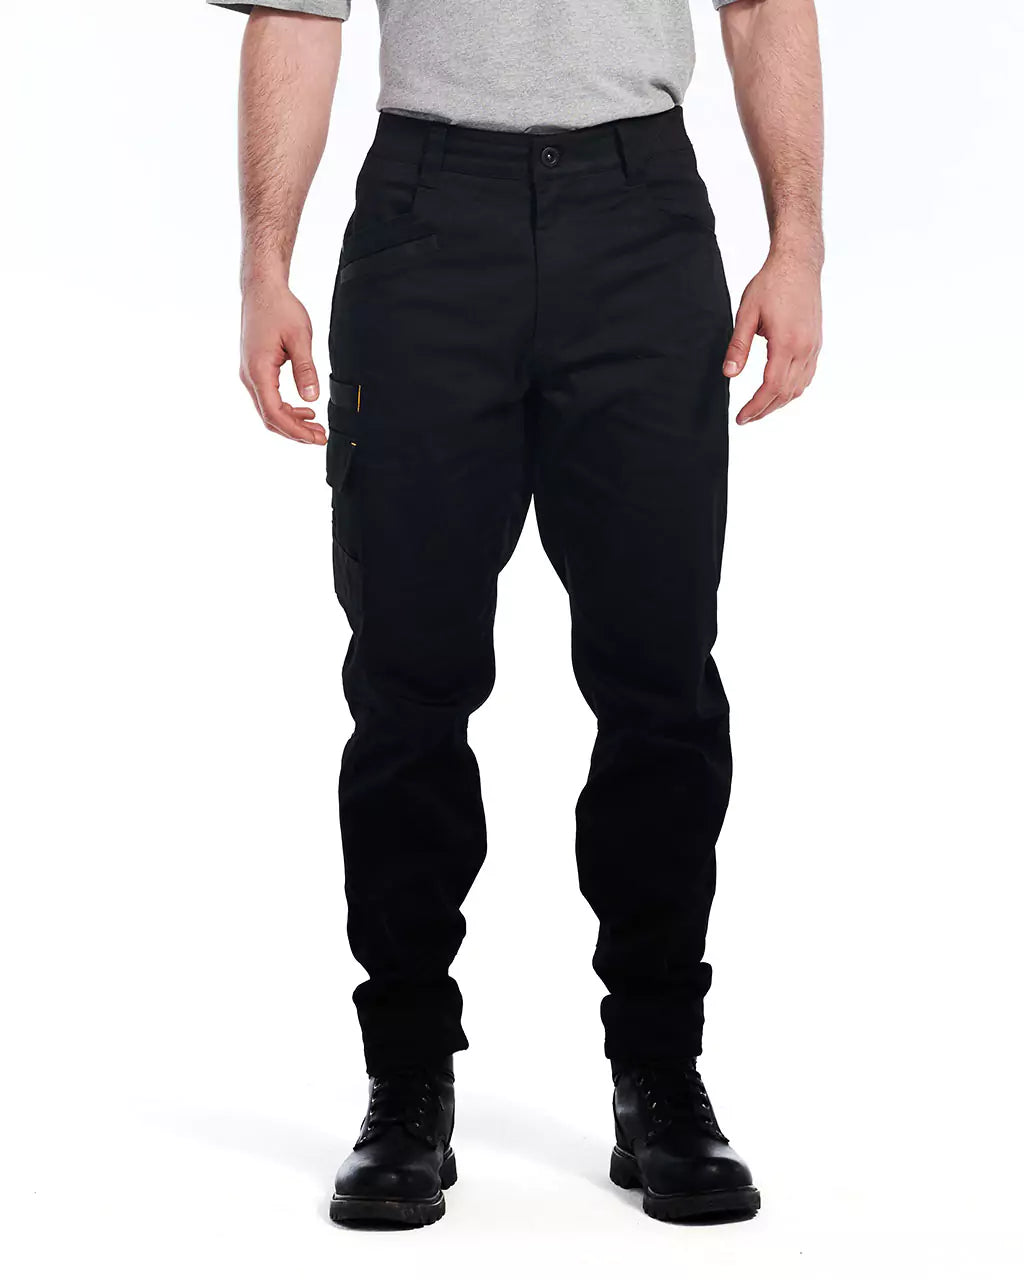 cat workwear mens elite operator work pants black 1810075 016 1